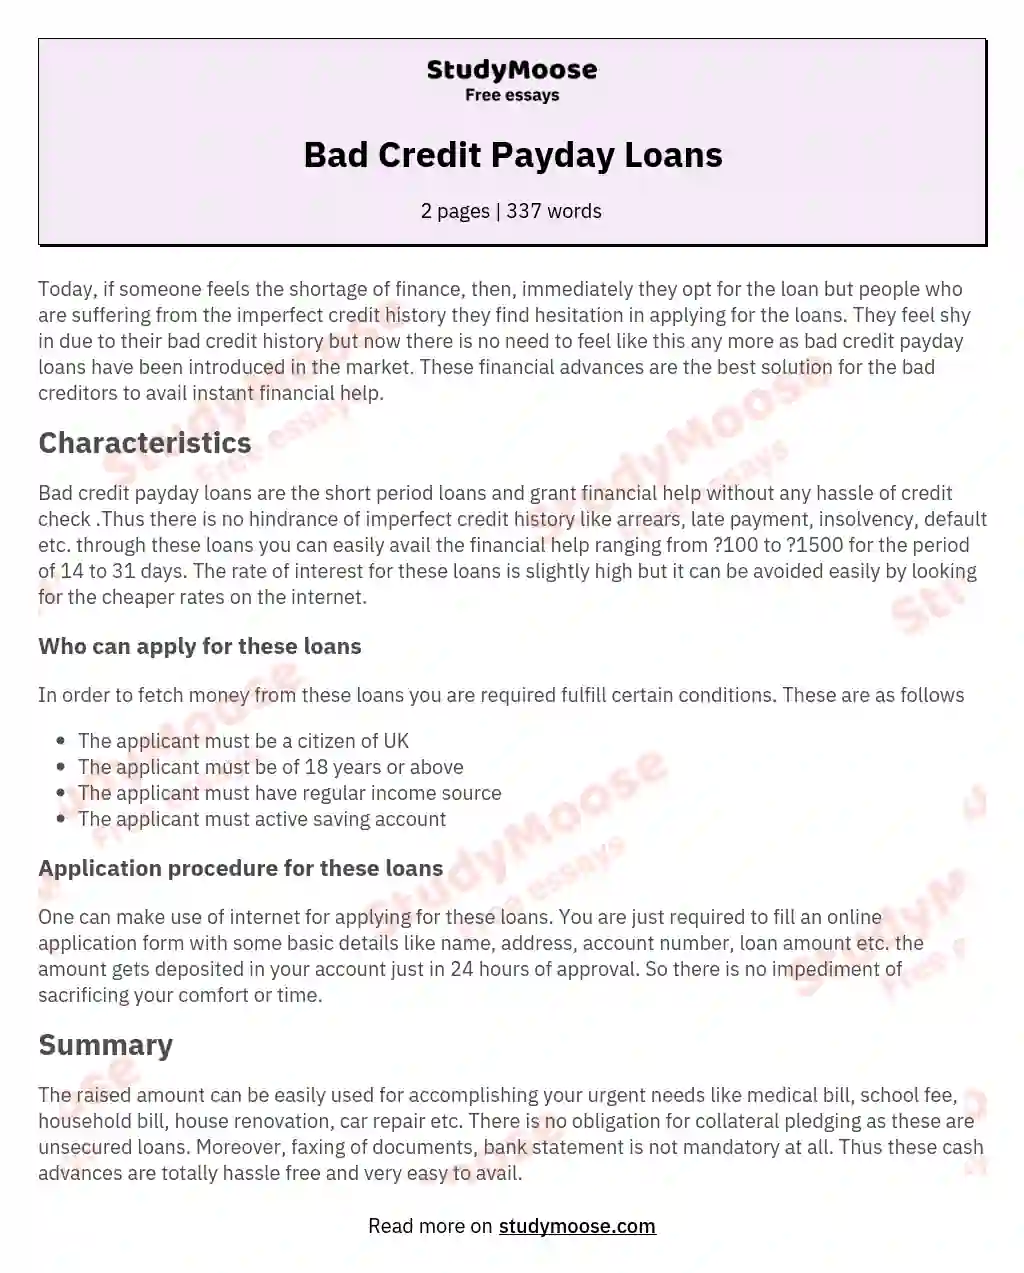 Bad Credit Payday Loans essay